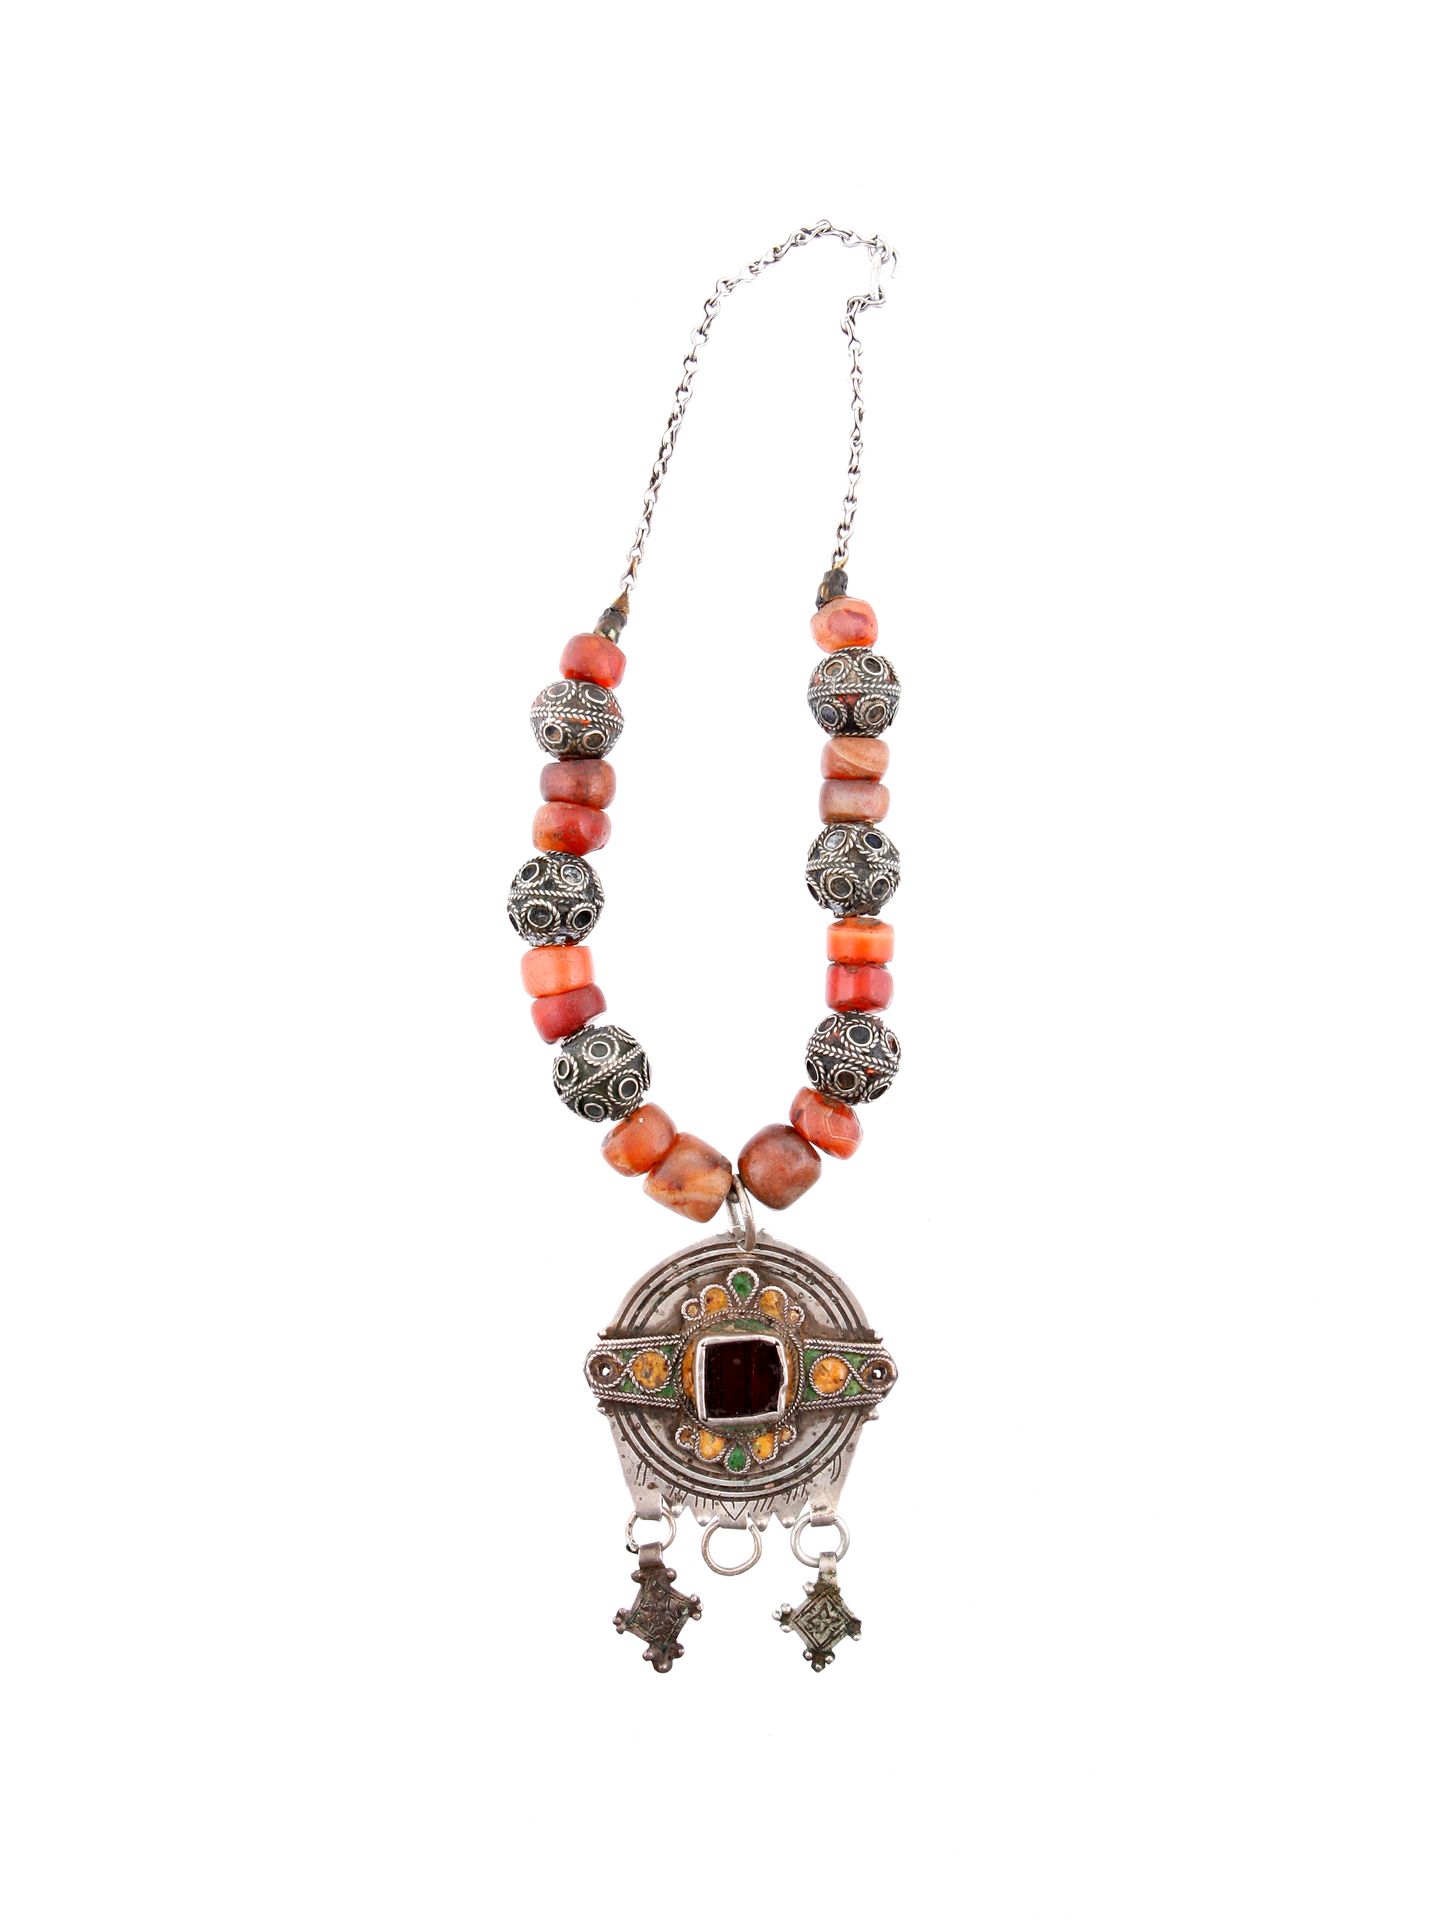 A Berber Necklace with a central Pendant Collier mit zentralem Schmuck-Anhänger
&hellip;